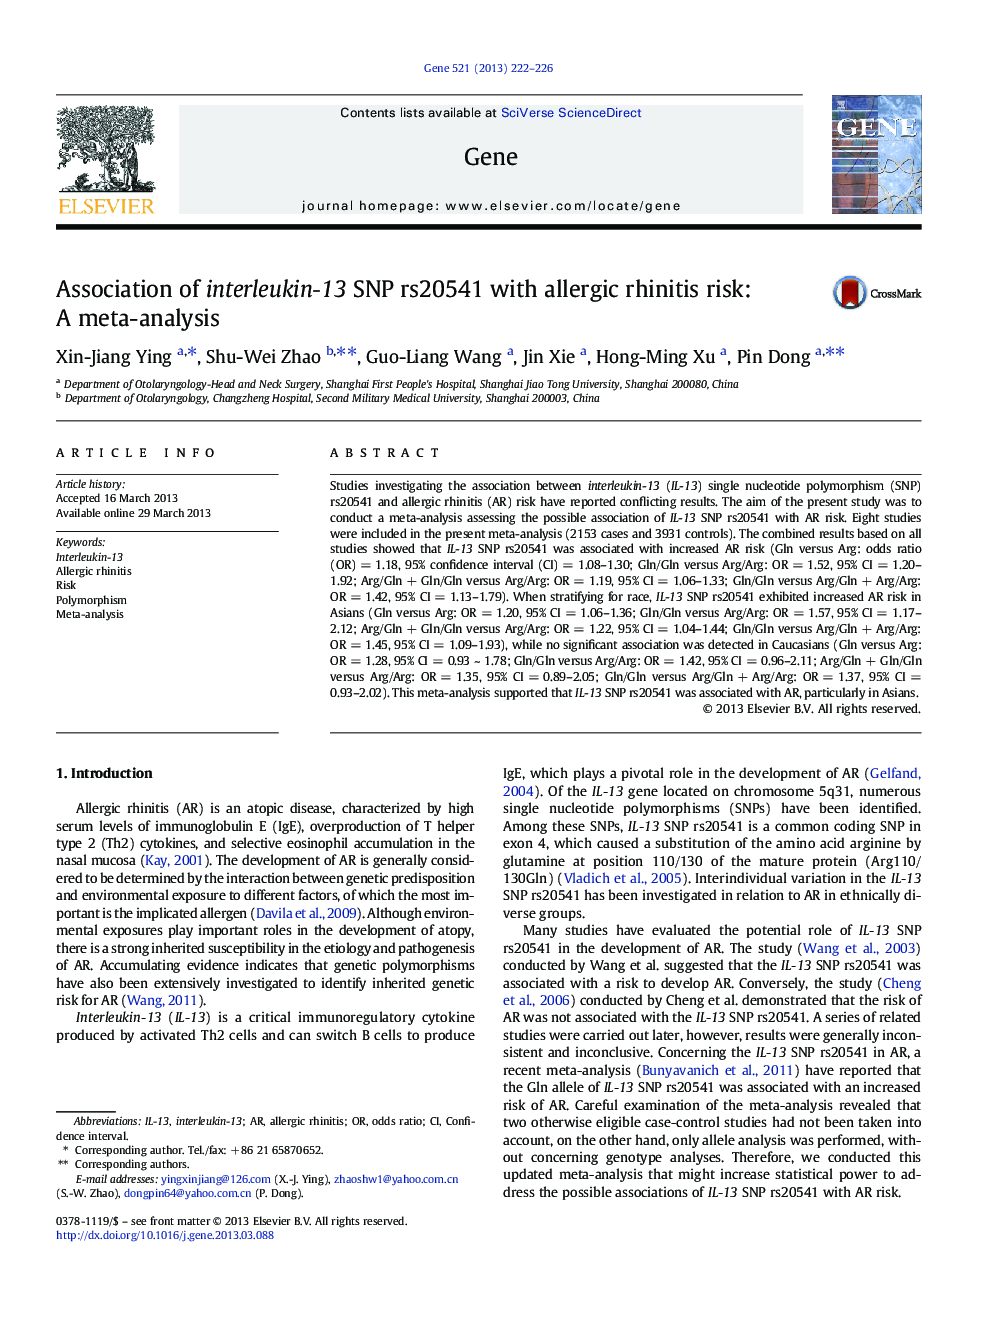 Association of interleukin-13 SNP rs20541 with allergic rhinitis risk: A meta-analysis